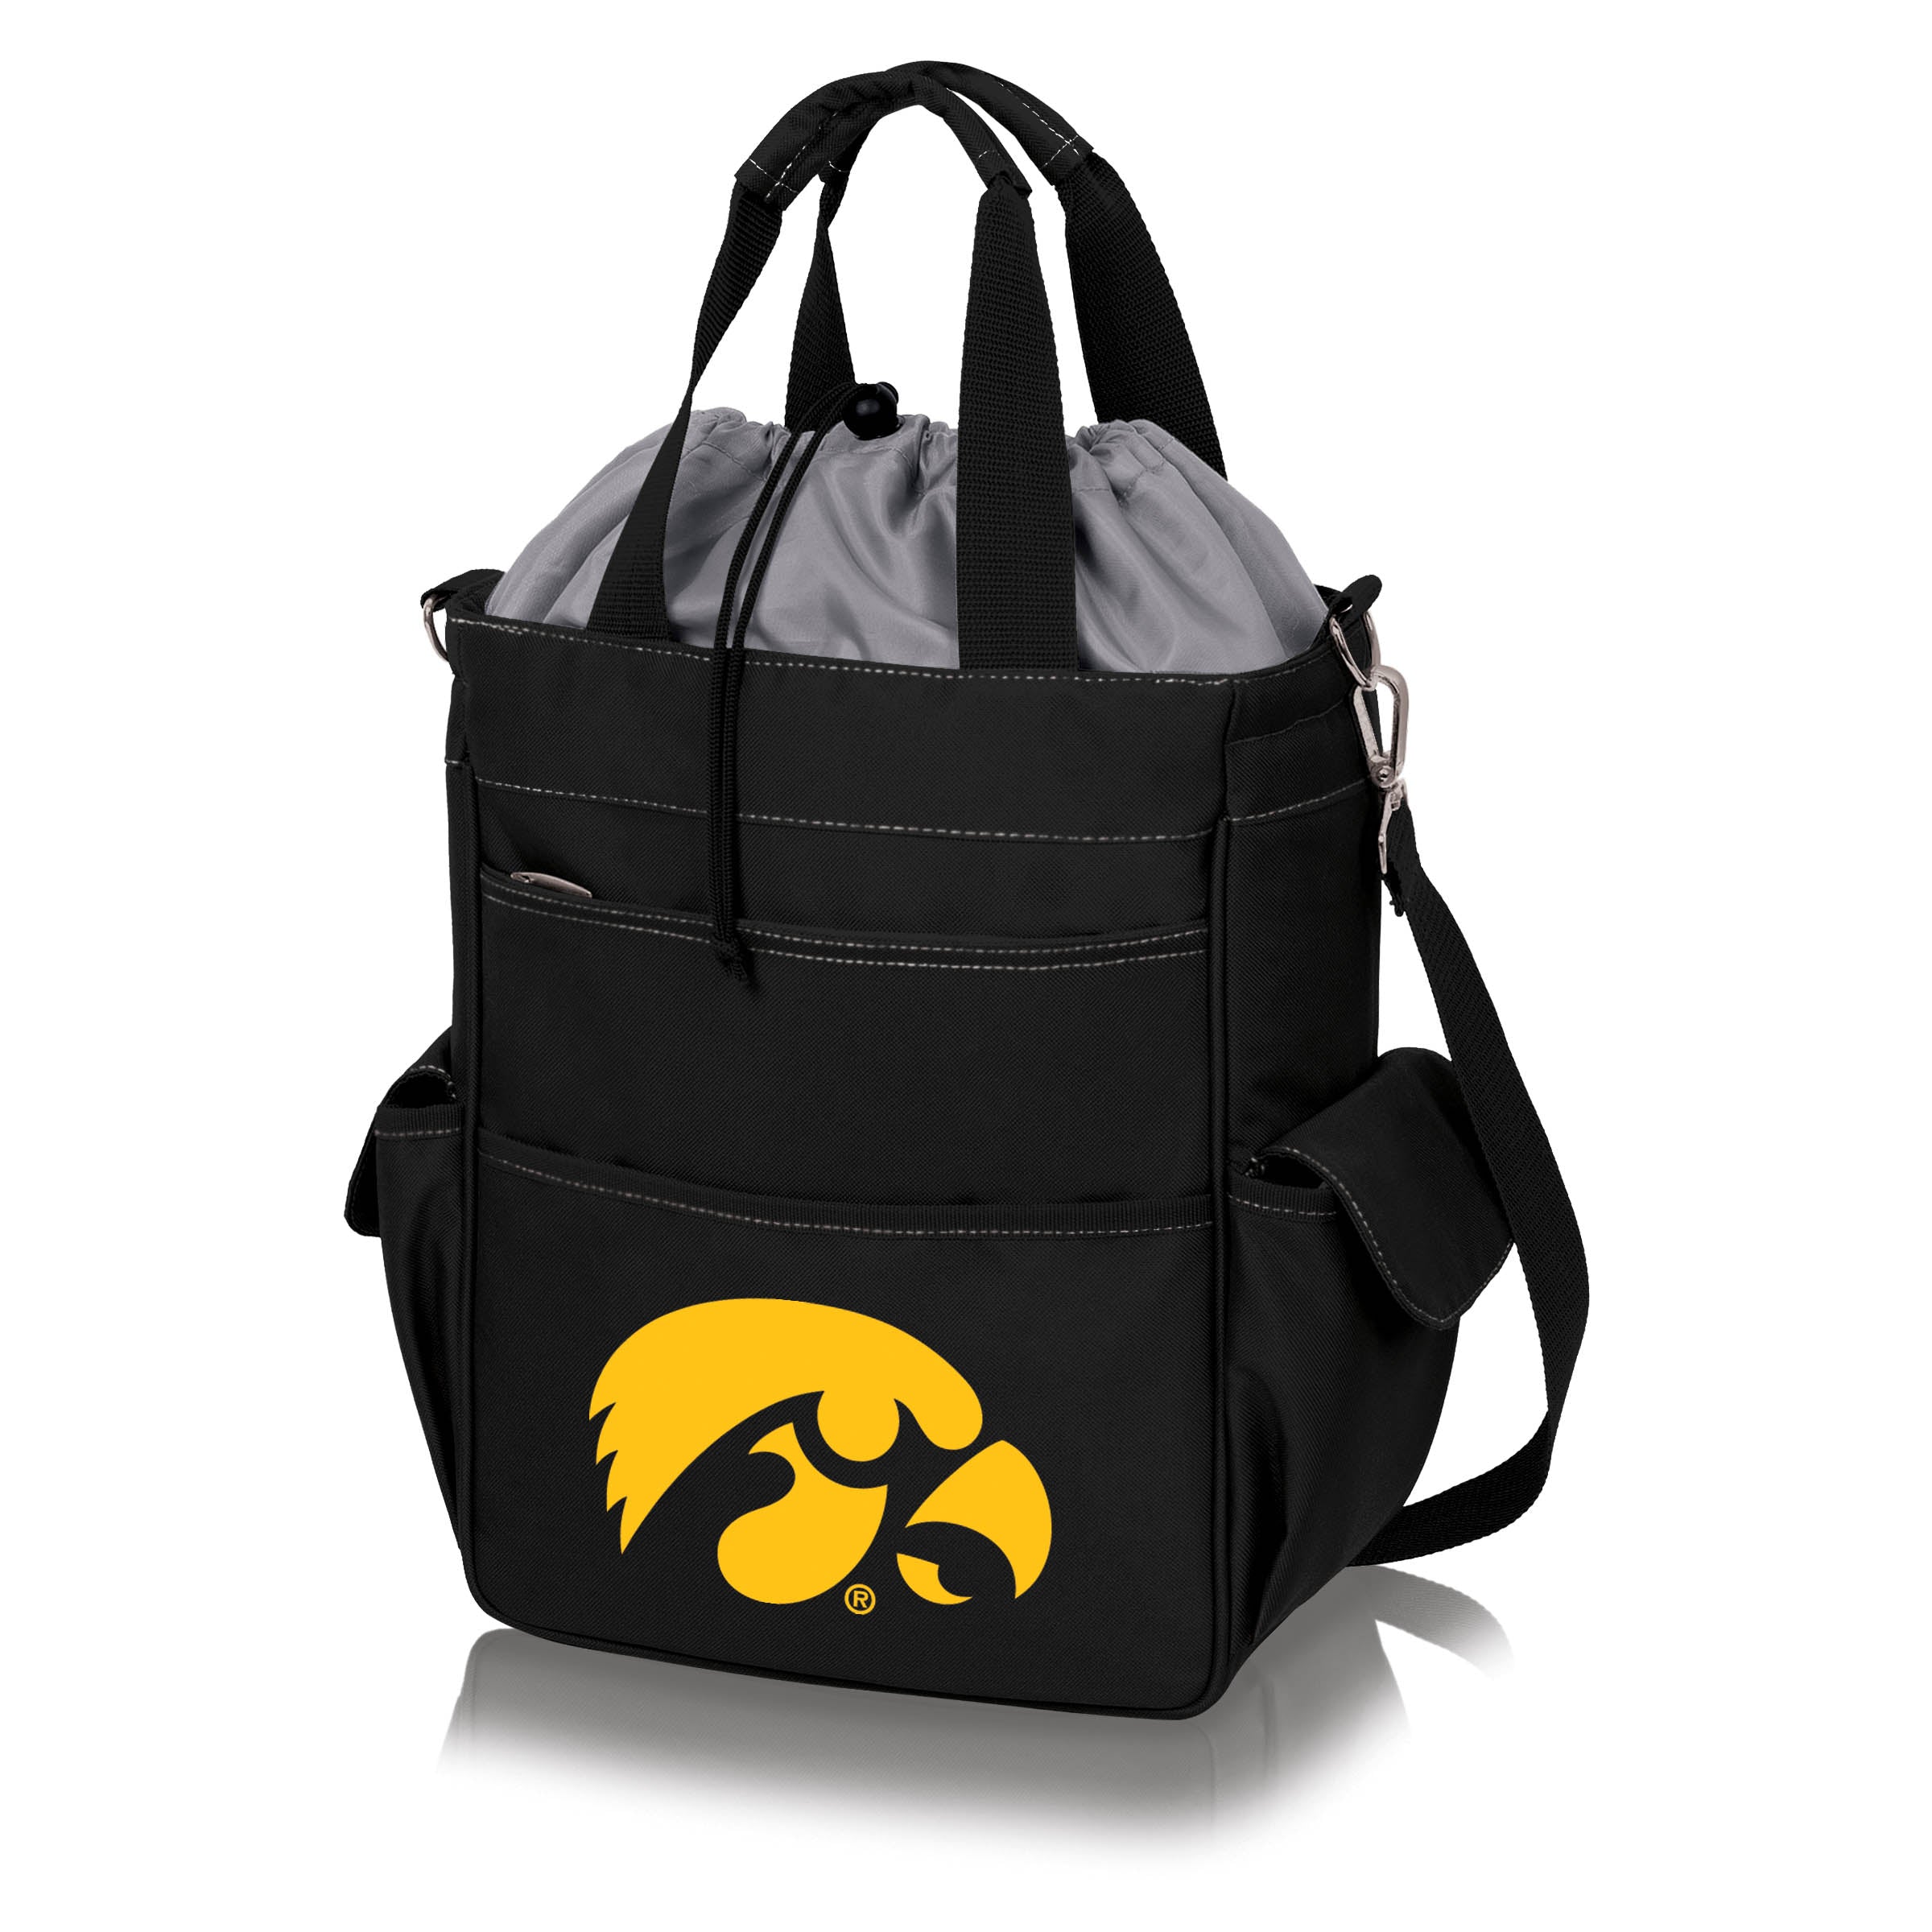 Iowa Hawkeyes - Activo Cooler Tote Bag